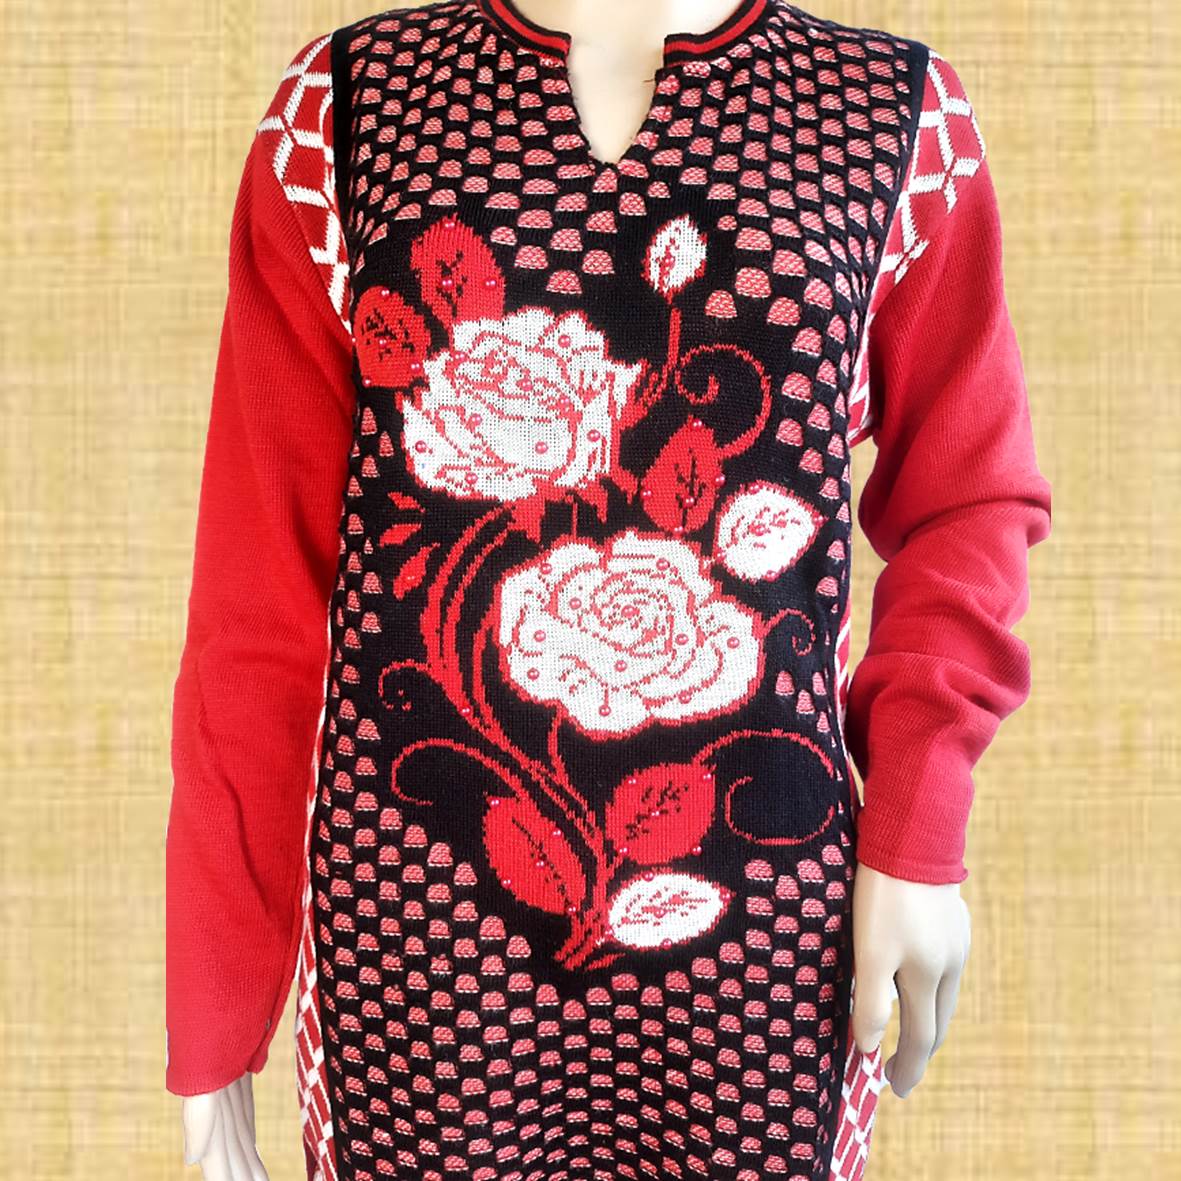 Graminarts Handmade Woollen Kurti Knitting Designs For Girls/Women Online